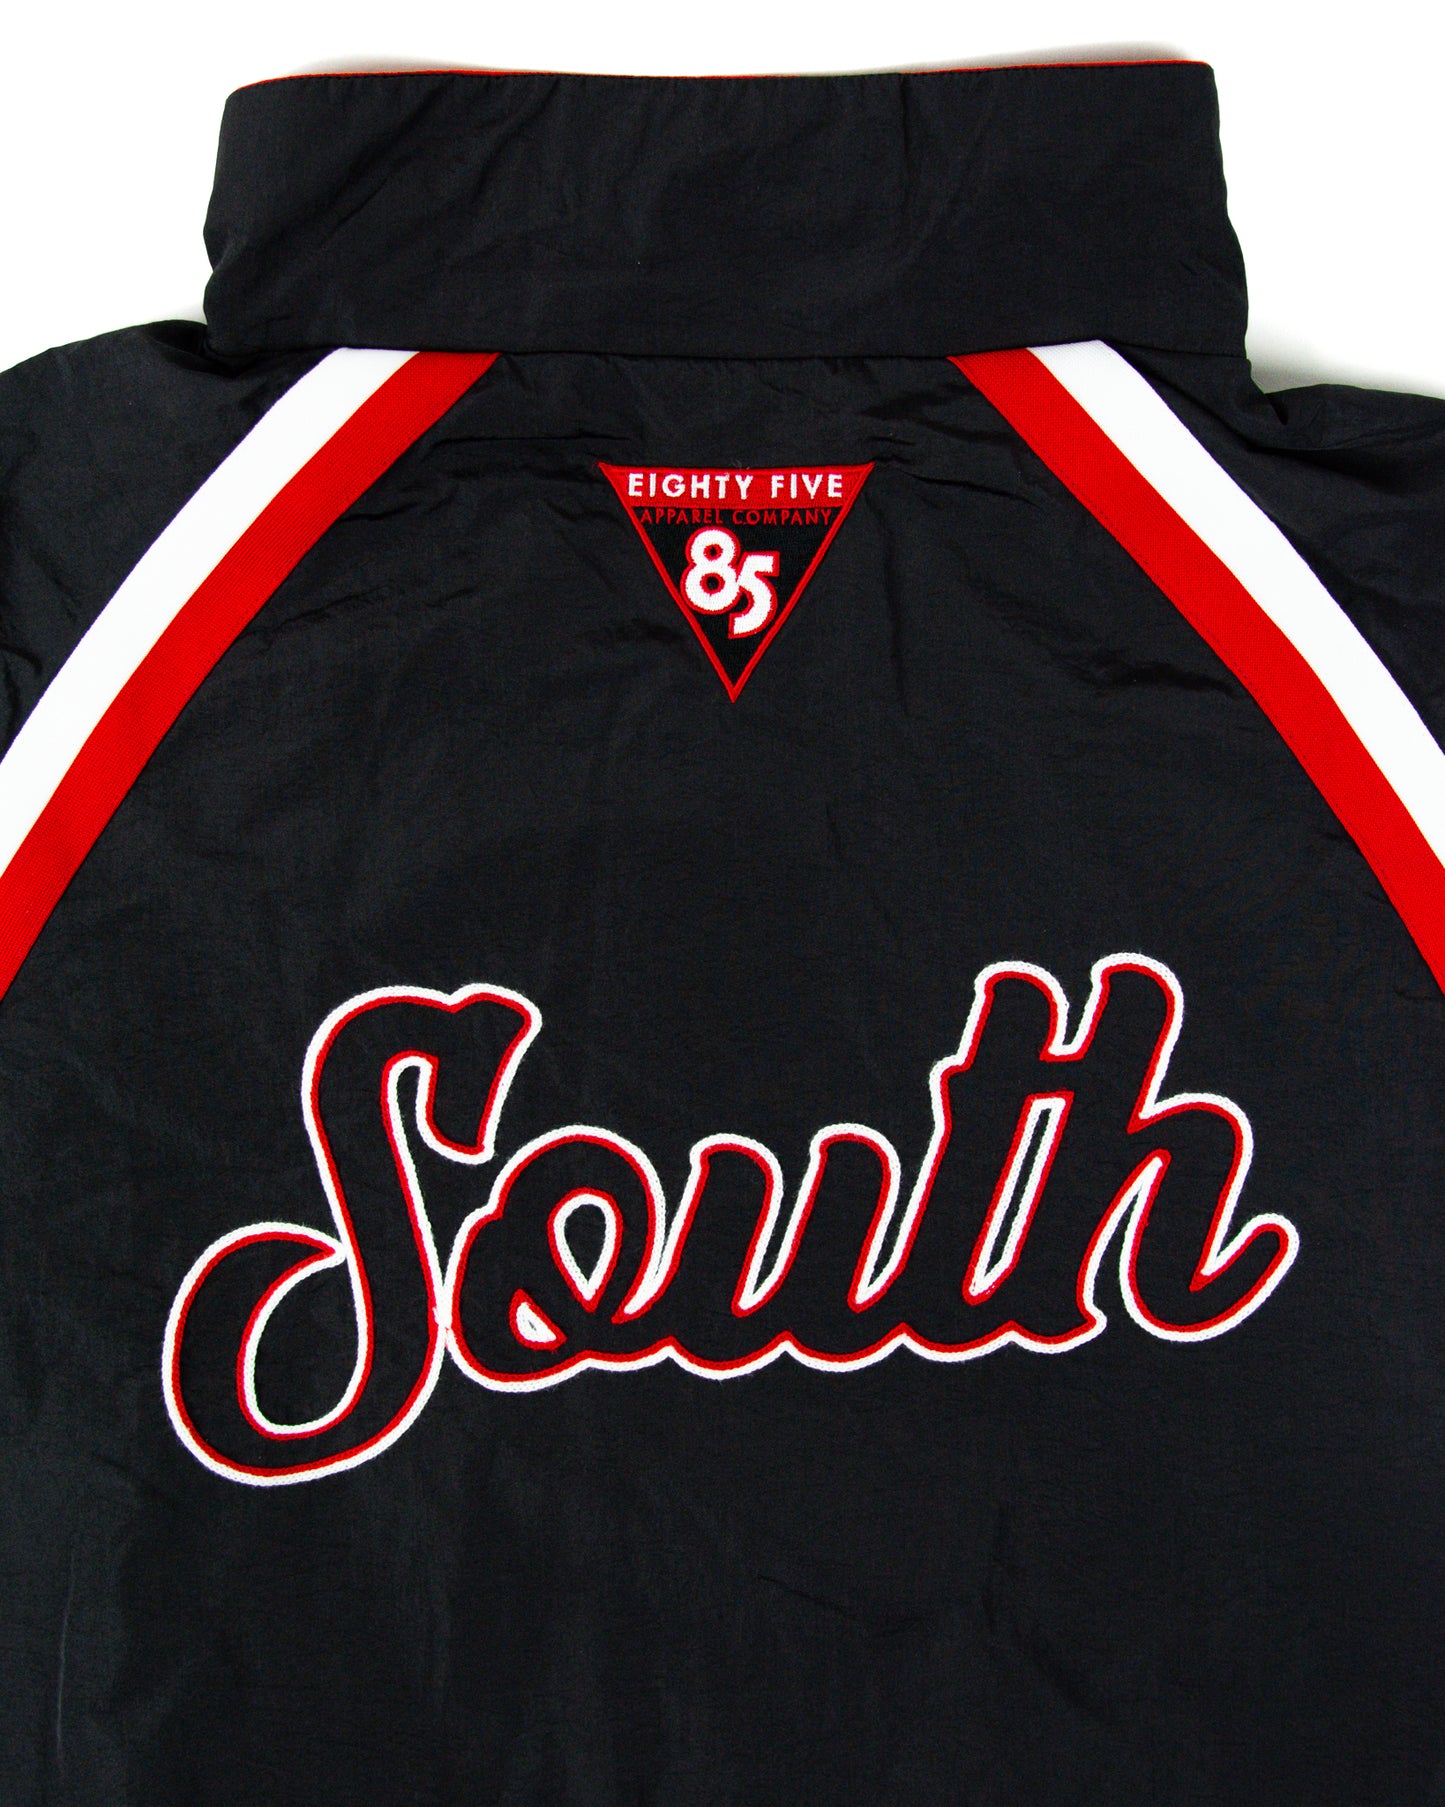 South Script Swishy Jacket - Black